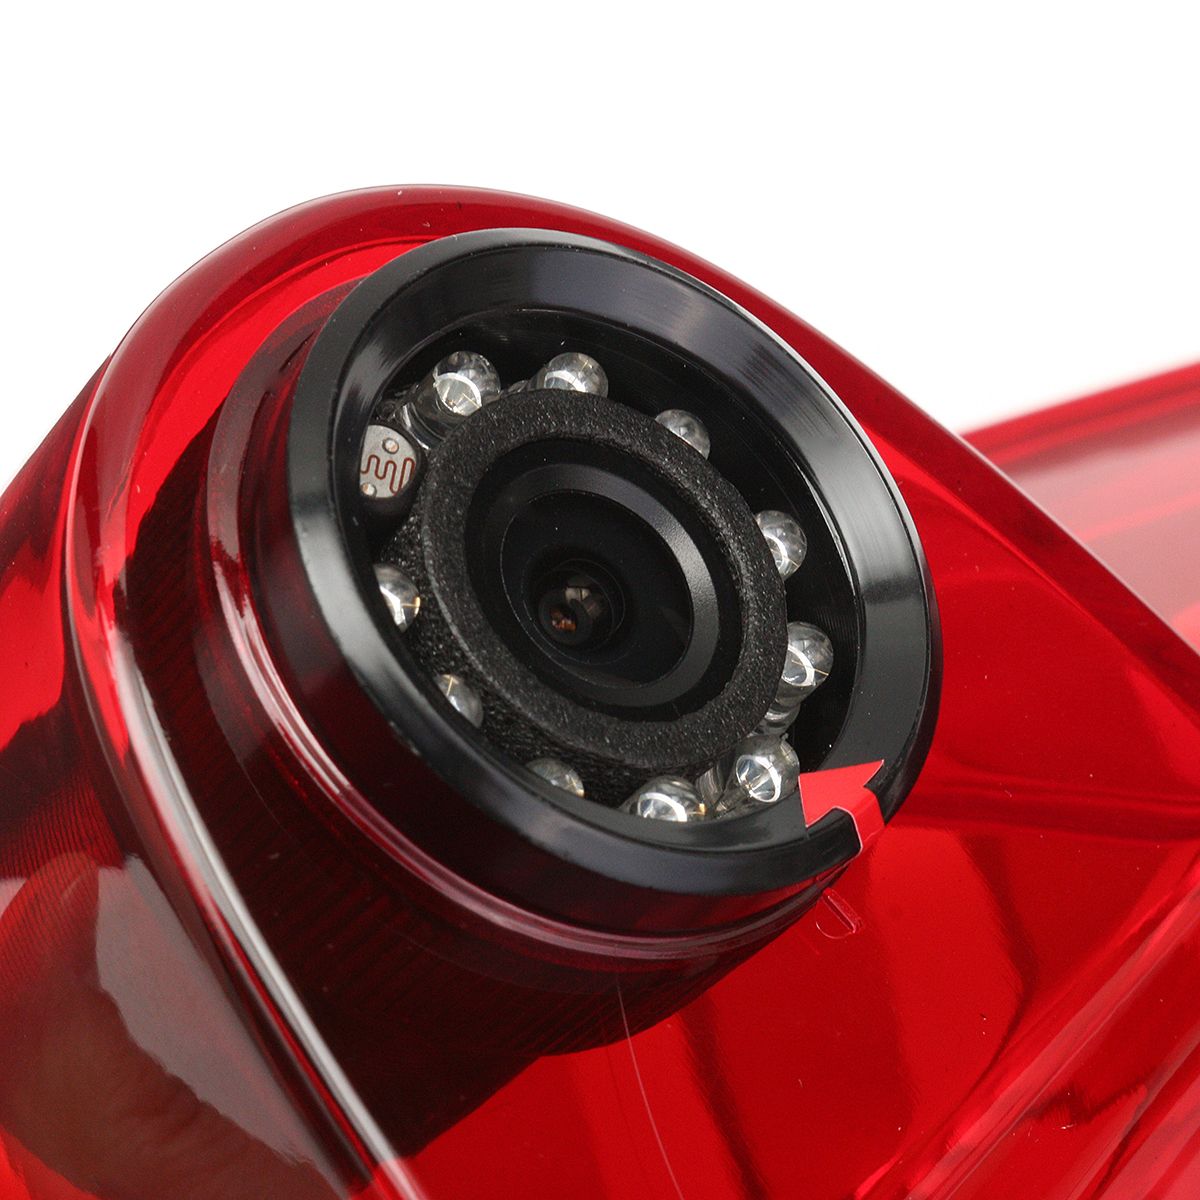 170-Degree-Car-Rear-View-Camera-Brake-Light-Night-Vision-For-Renault-Master-1393164